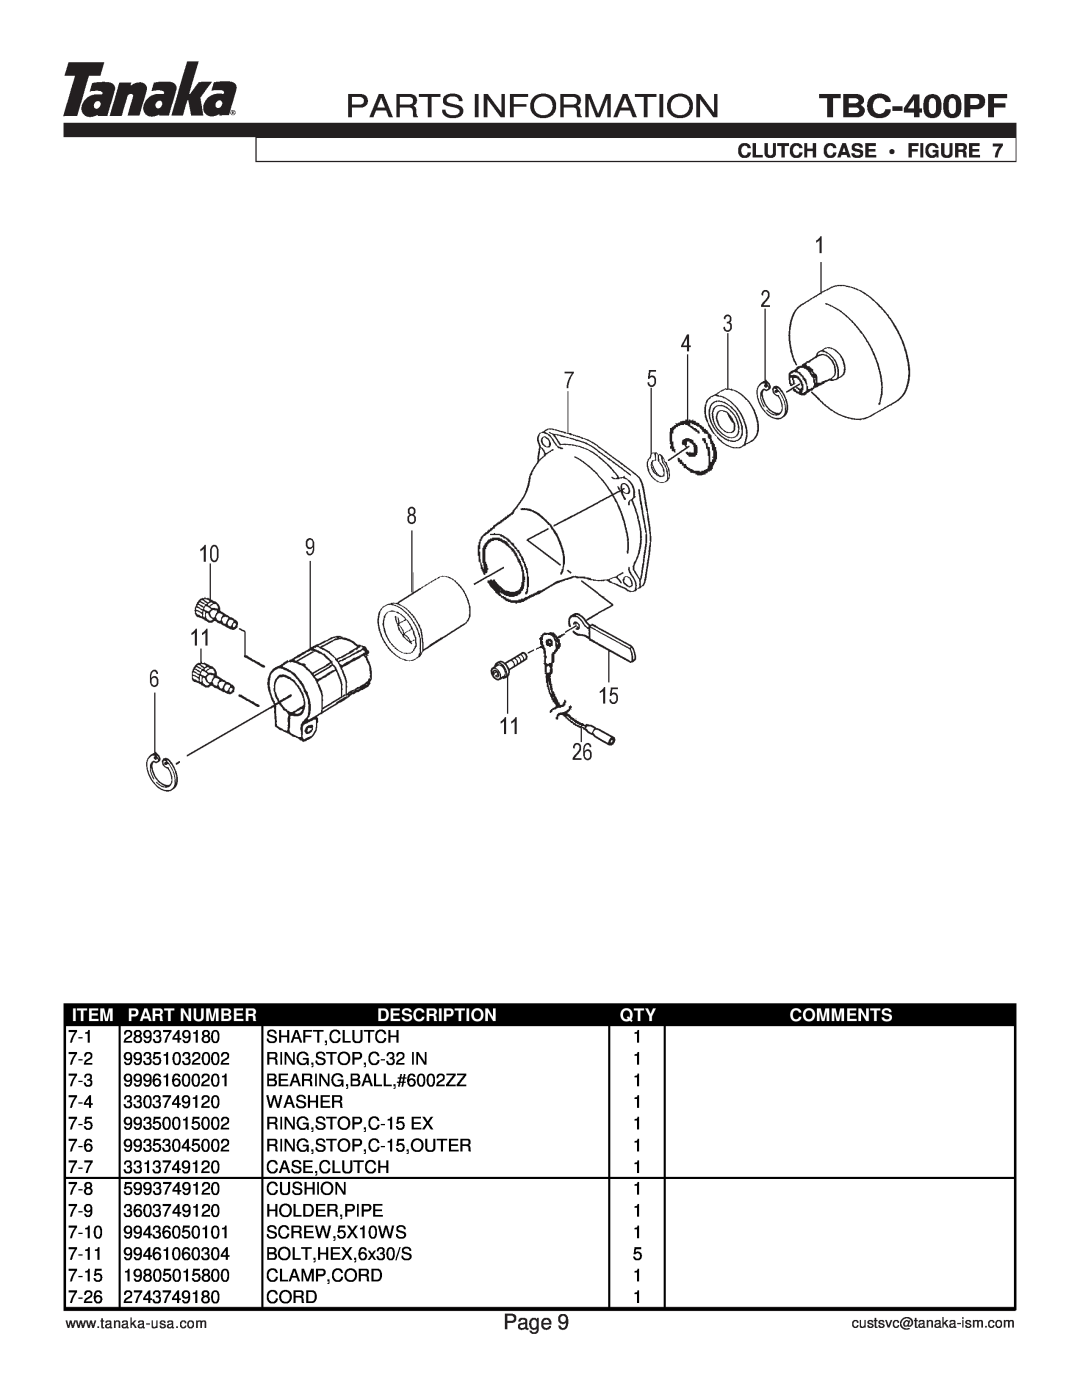 Tanaka TBC-400PF manual Clutch Case Figure, Parts Information, Page, Part Number, Description, Comments 